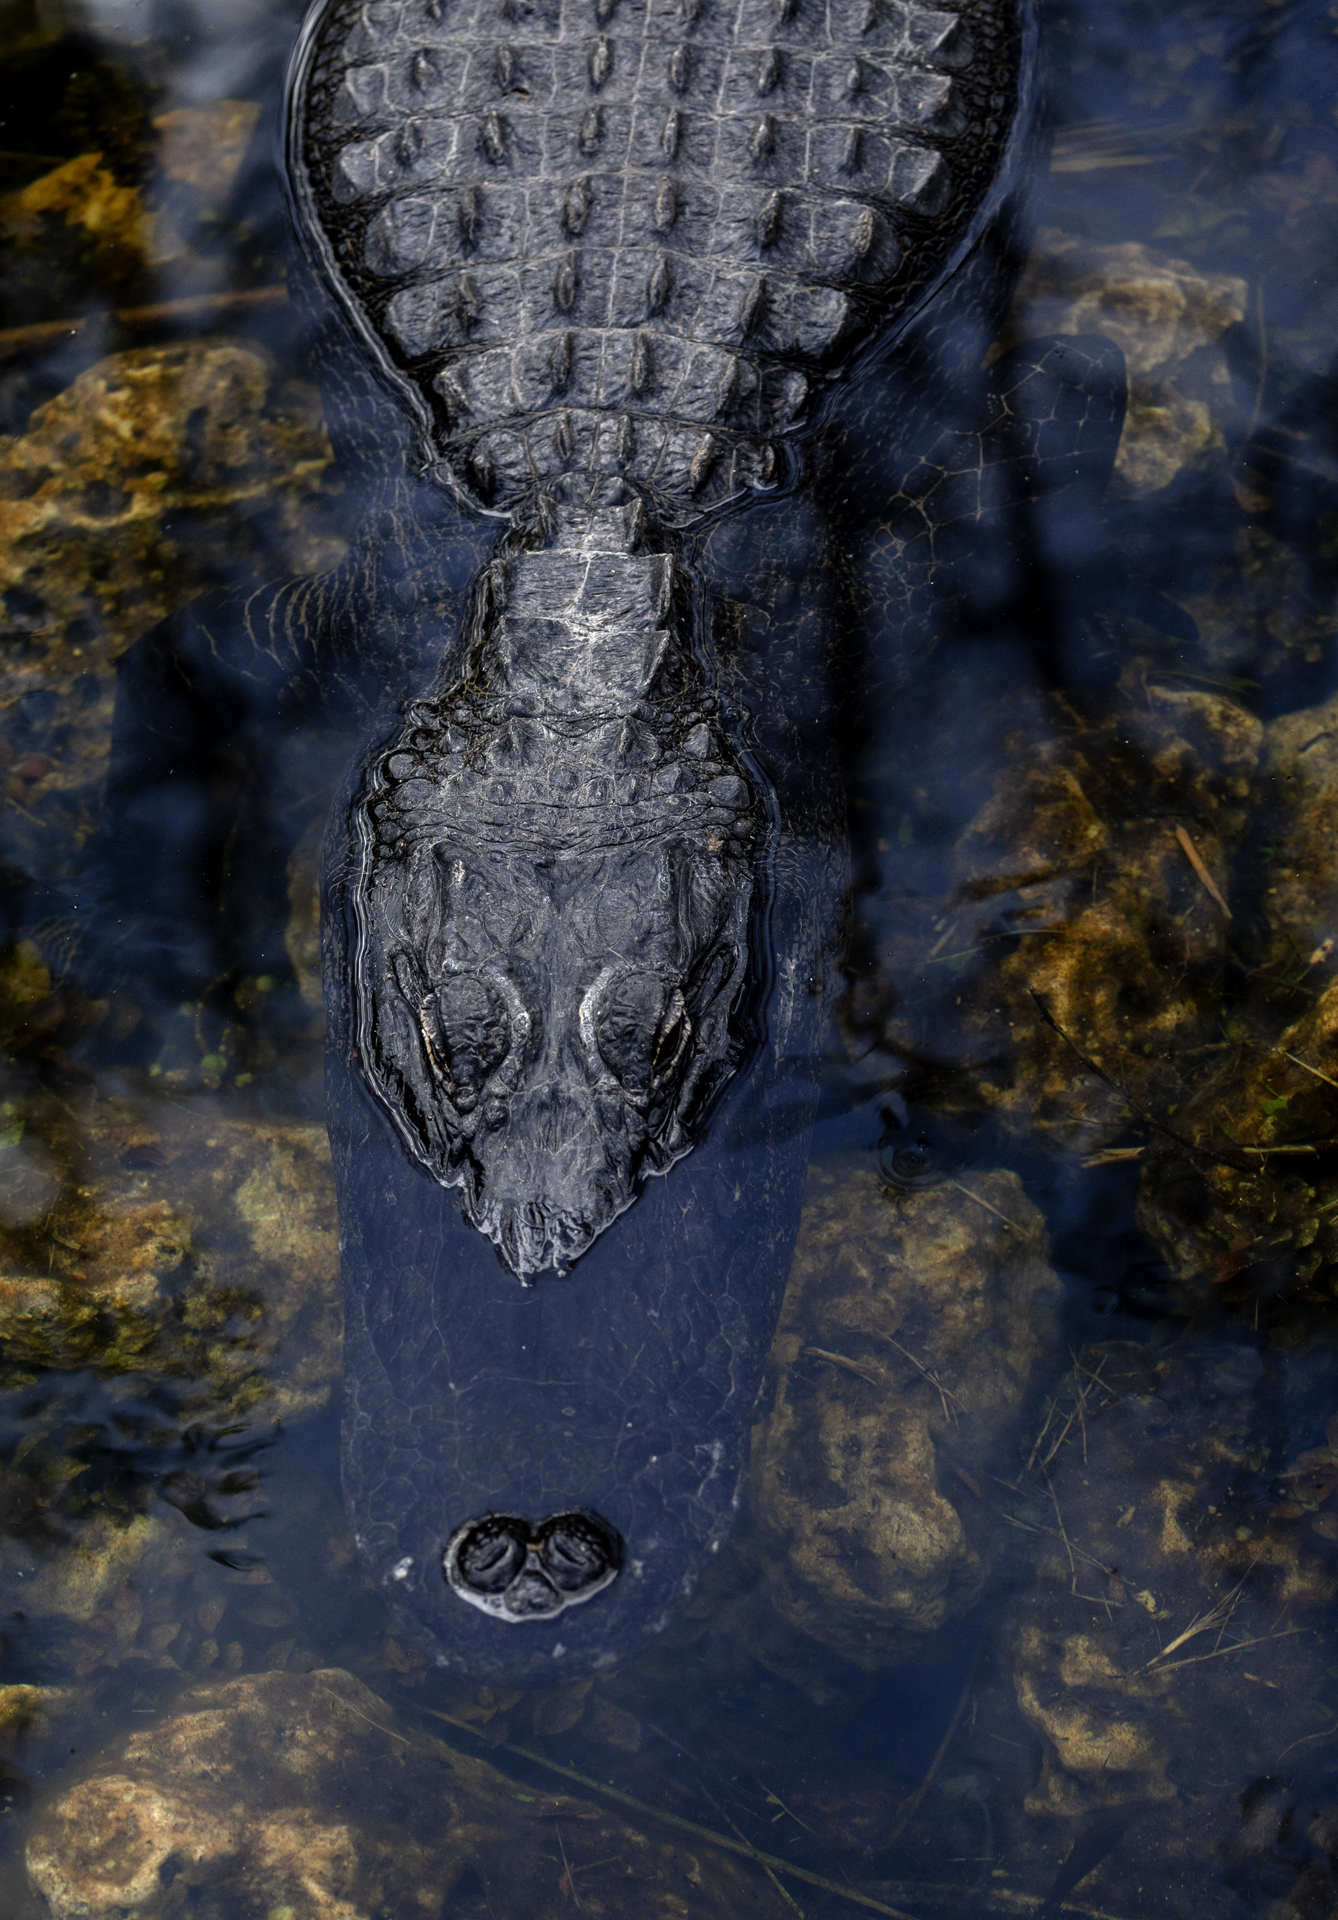 Alligator, Florida